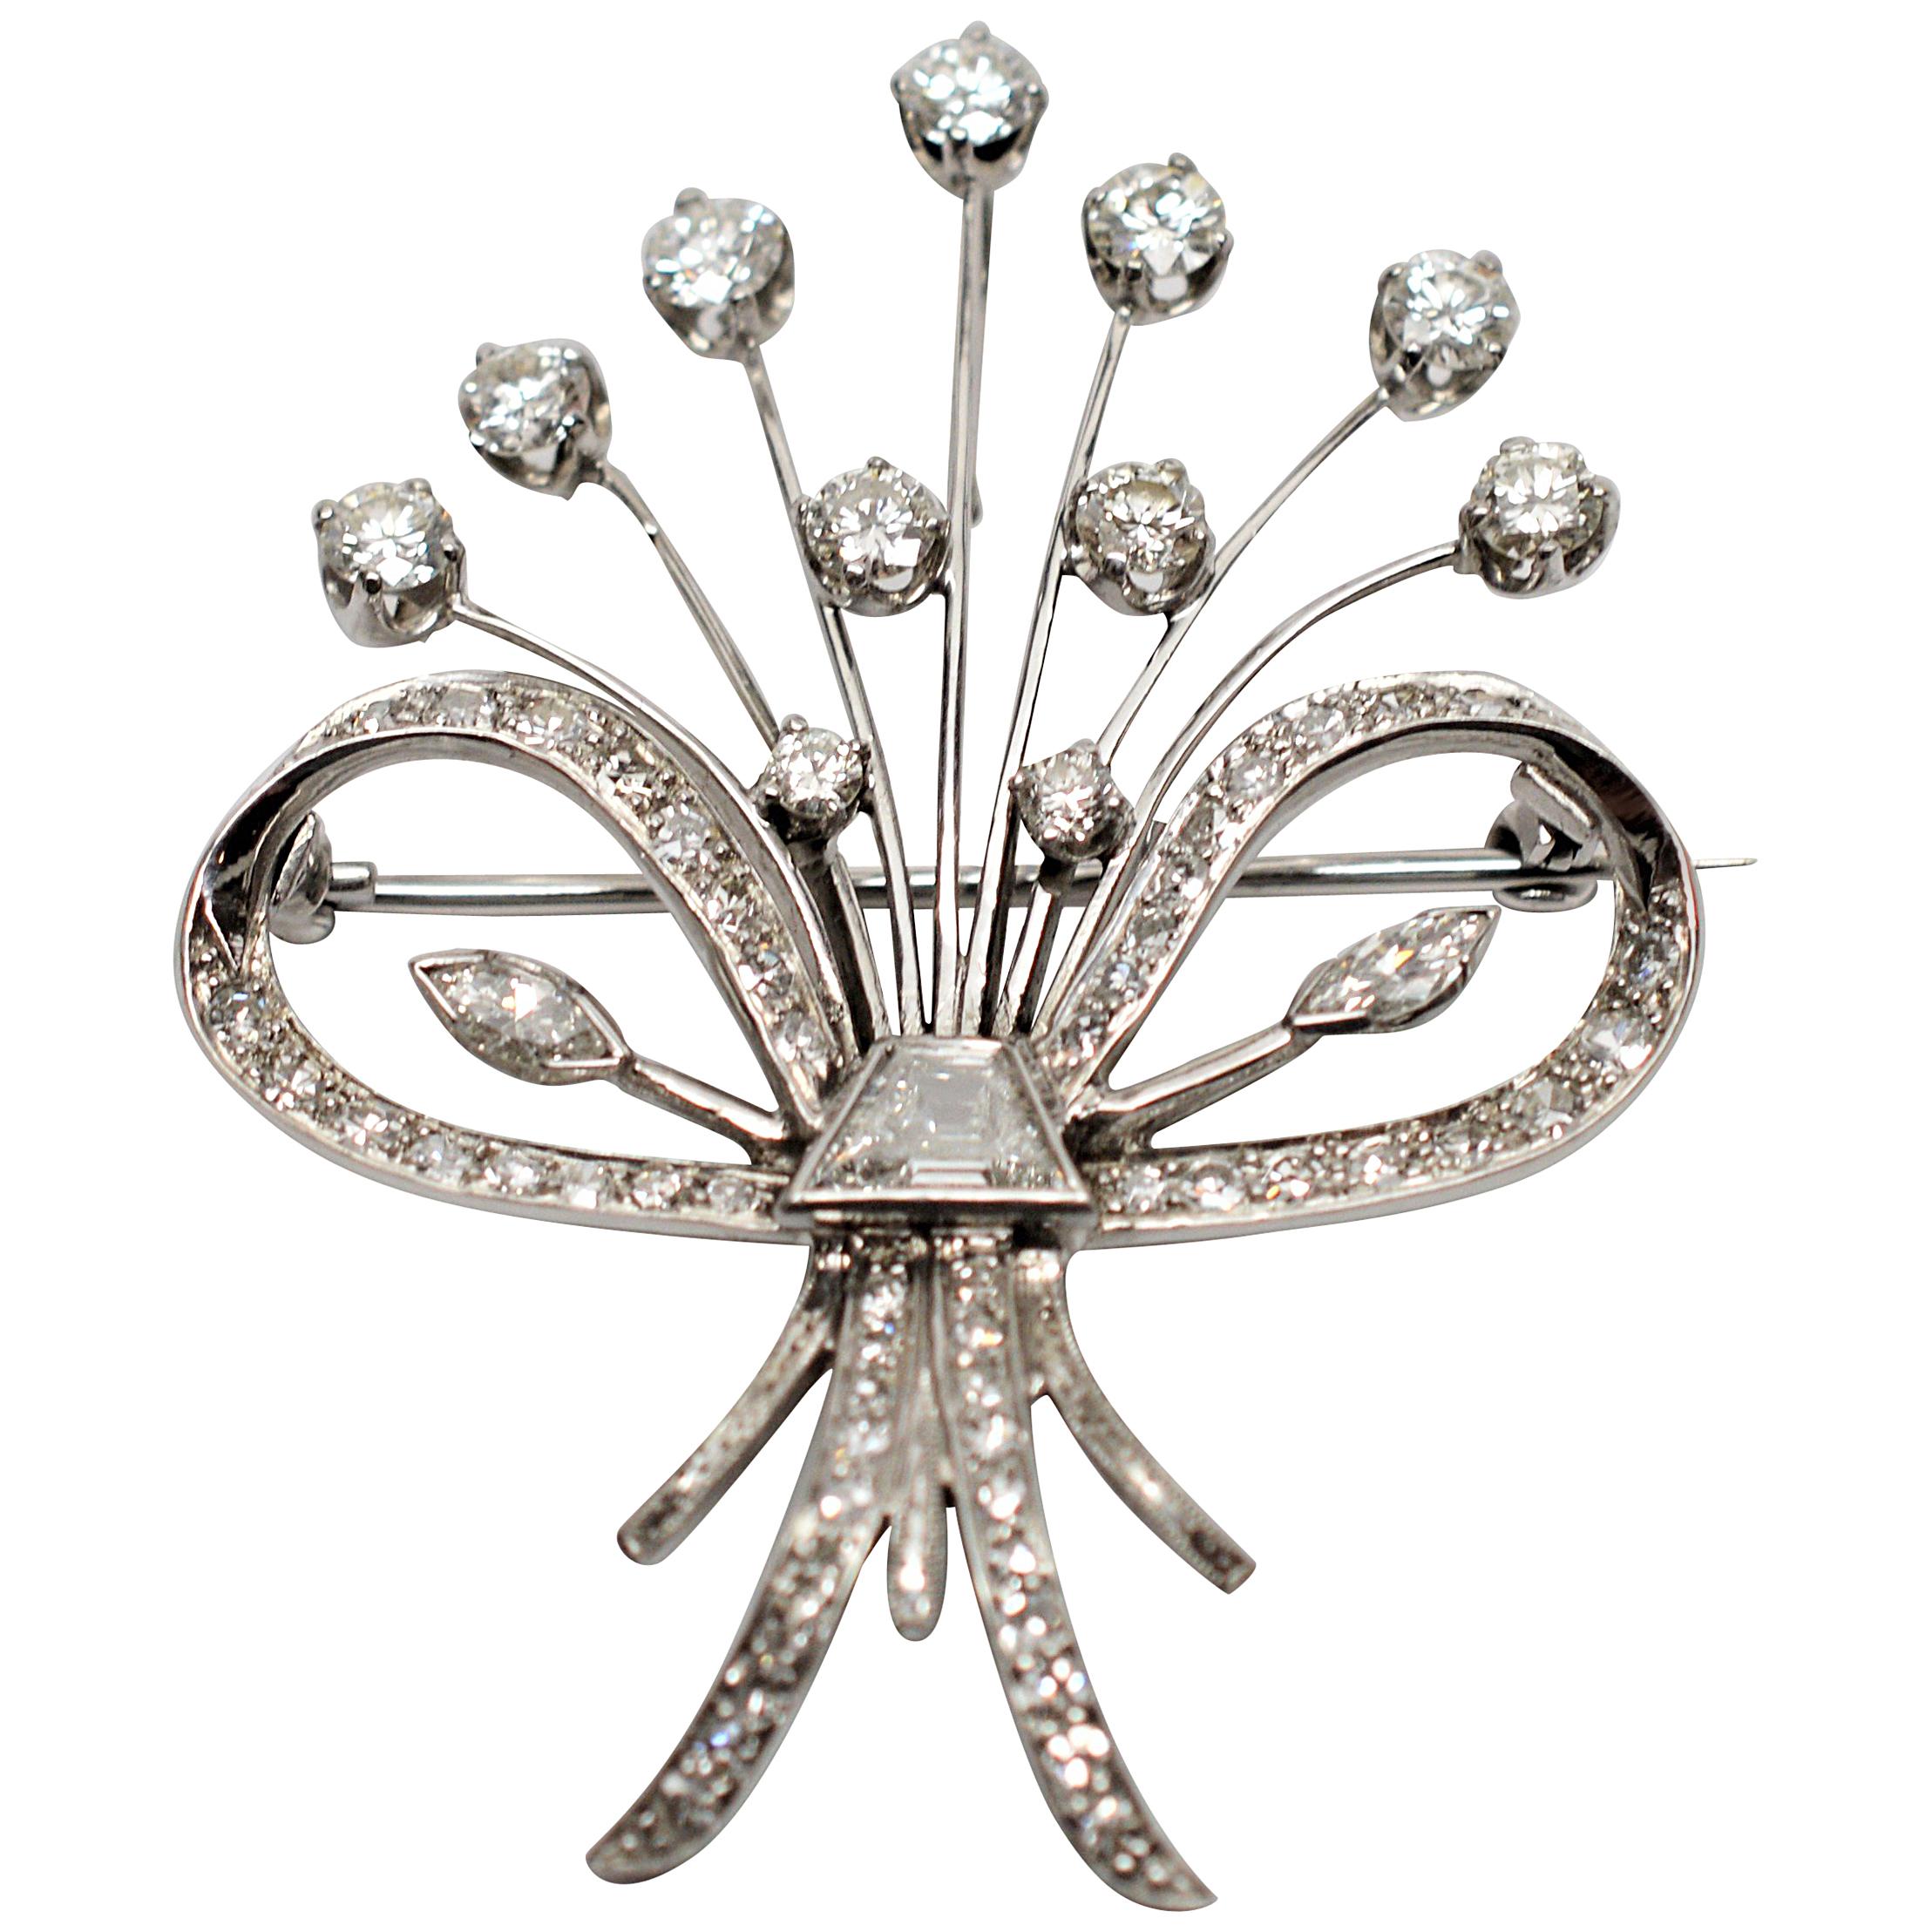  Bouquet of Diamonds 18 Karat White Gold Brooch Pin Pendant